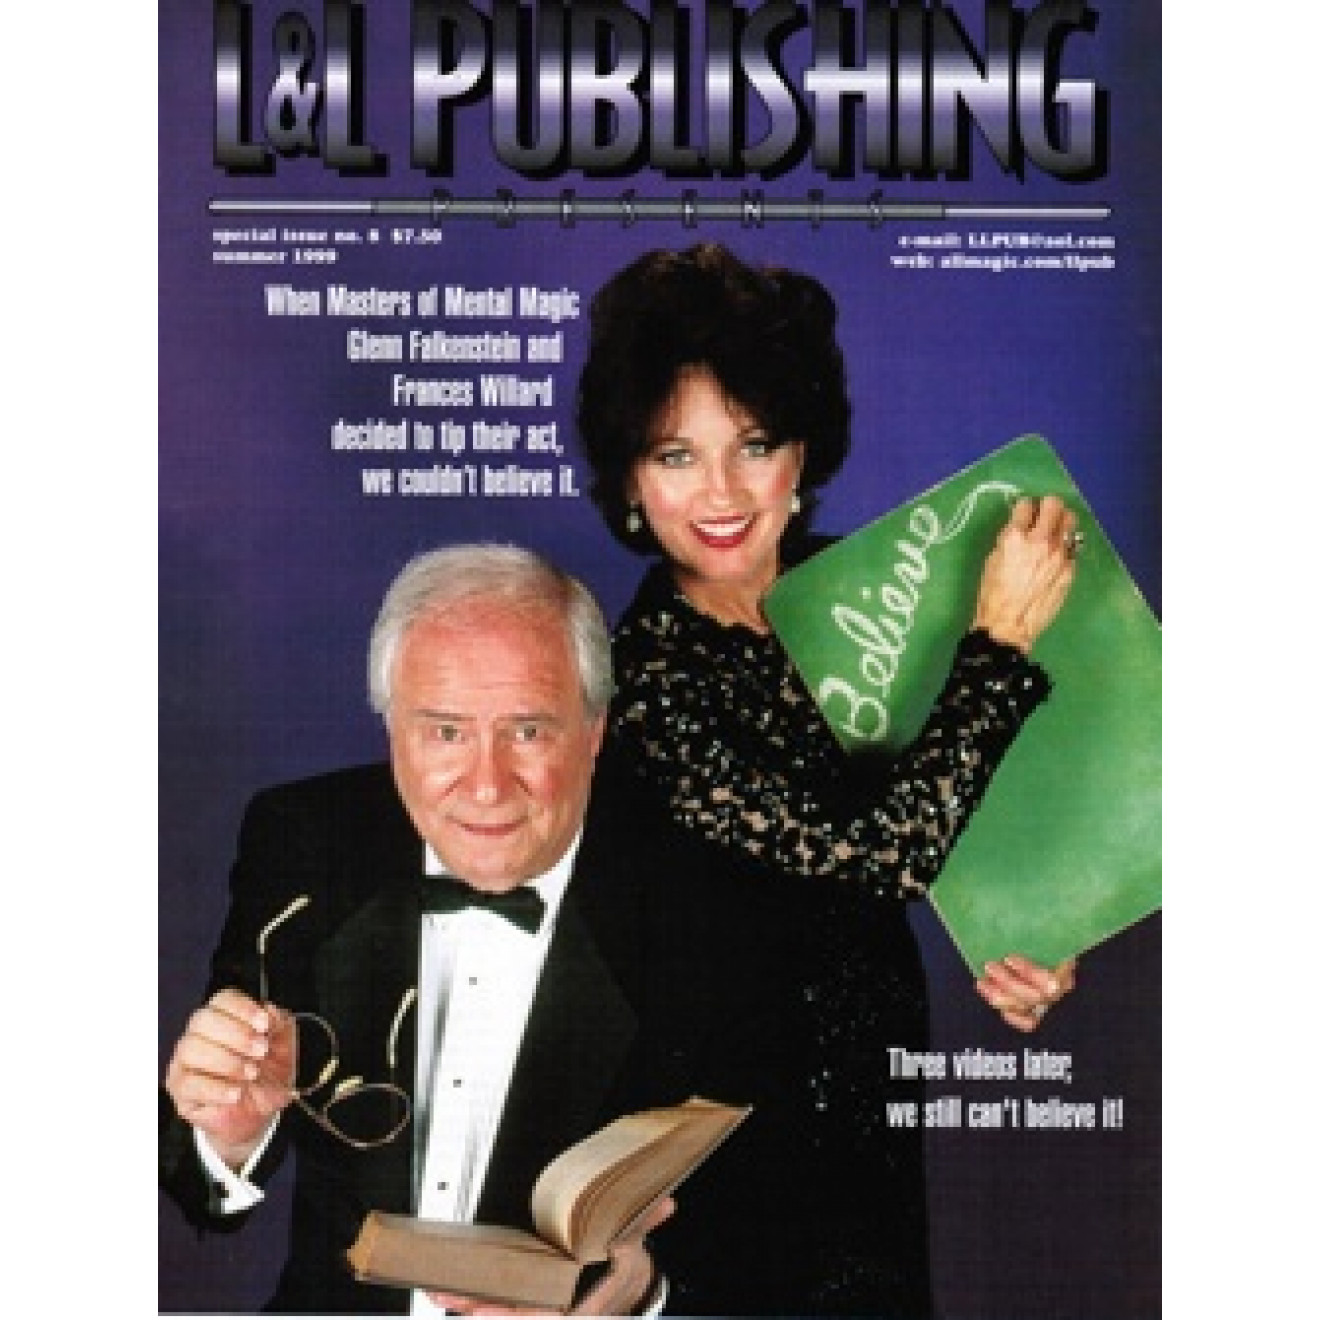 L&L Publishing No.8